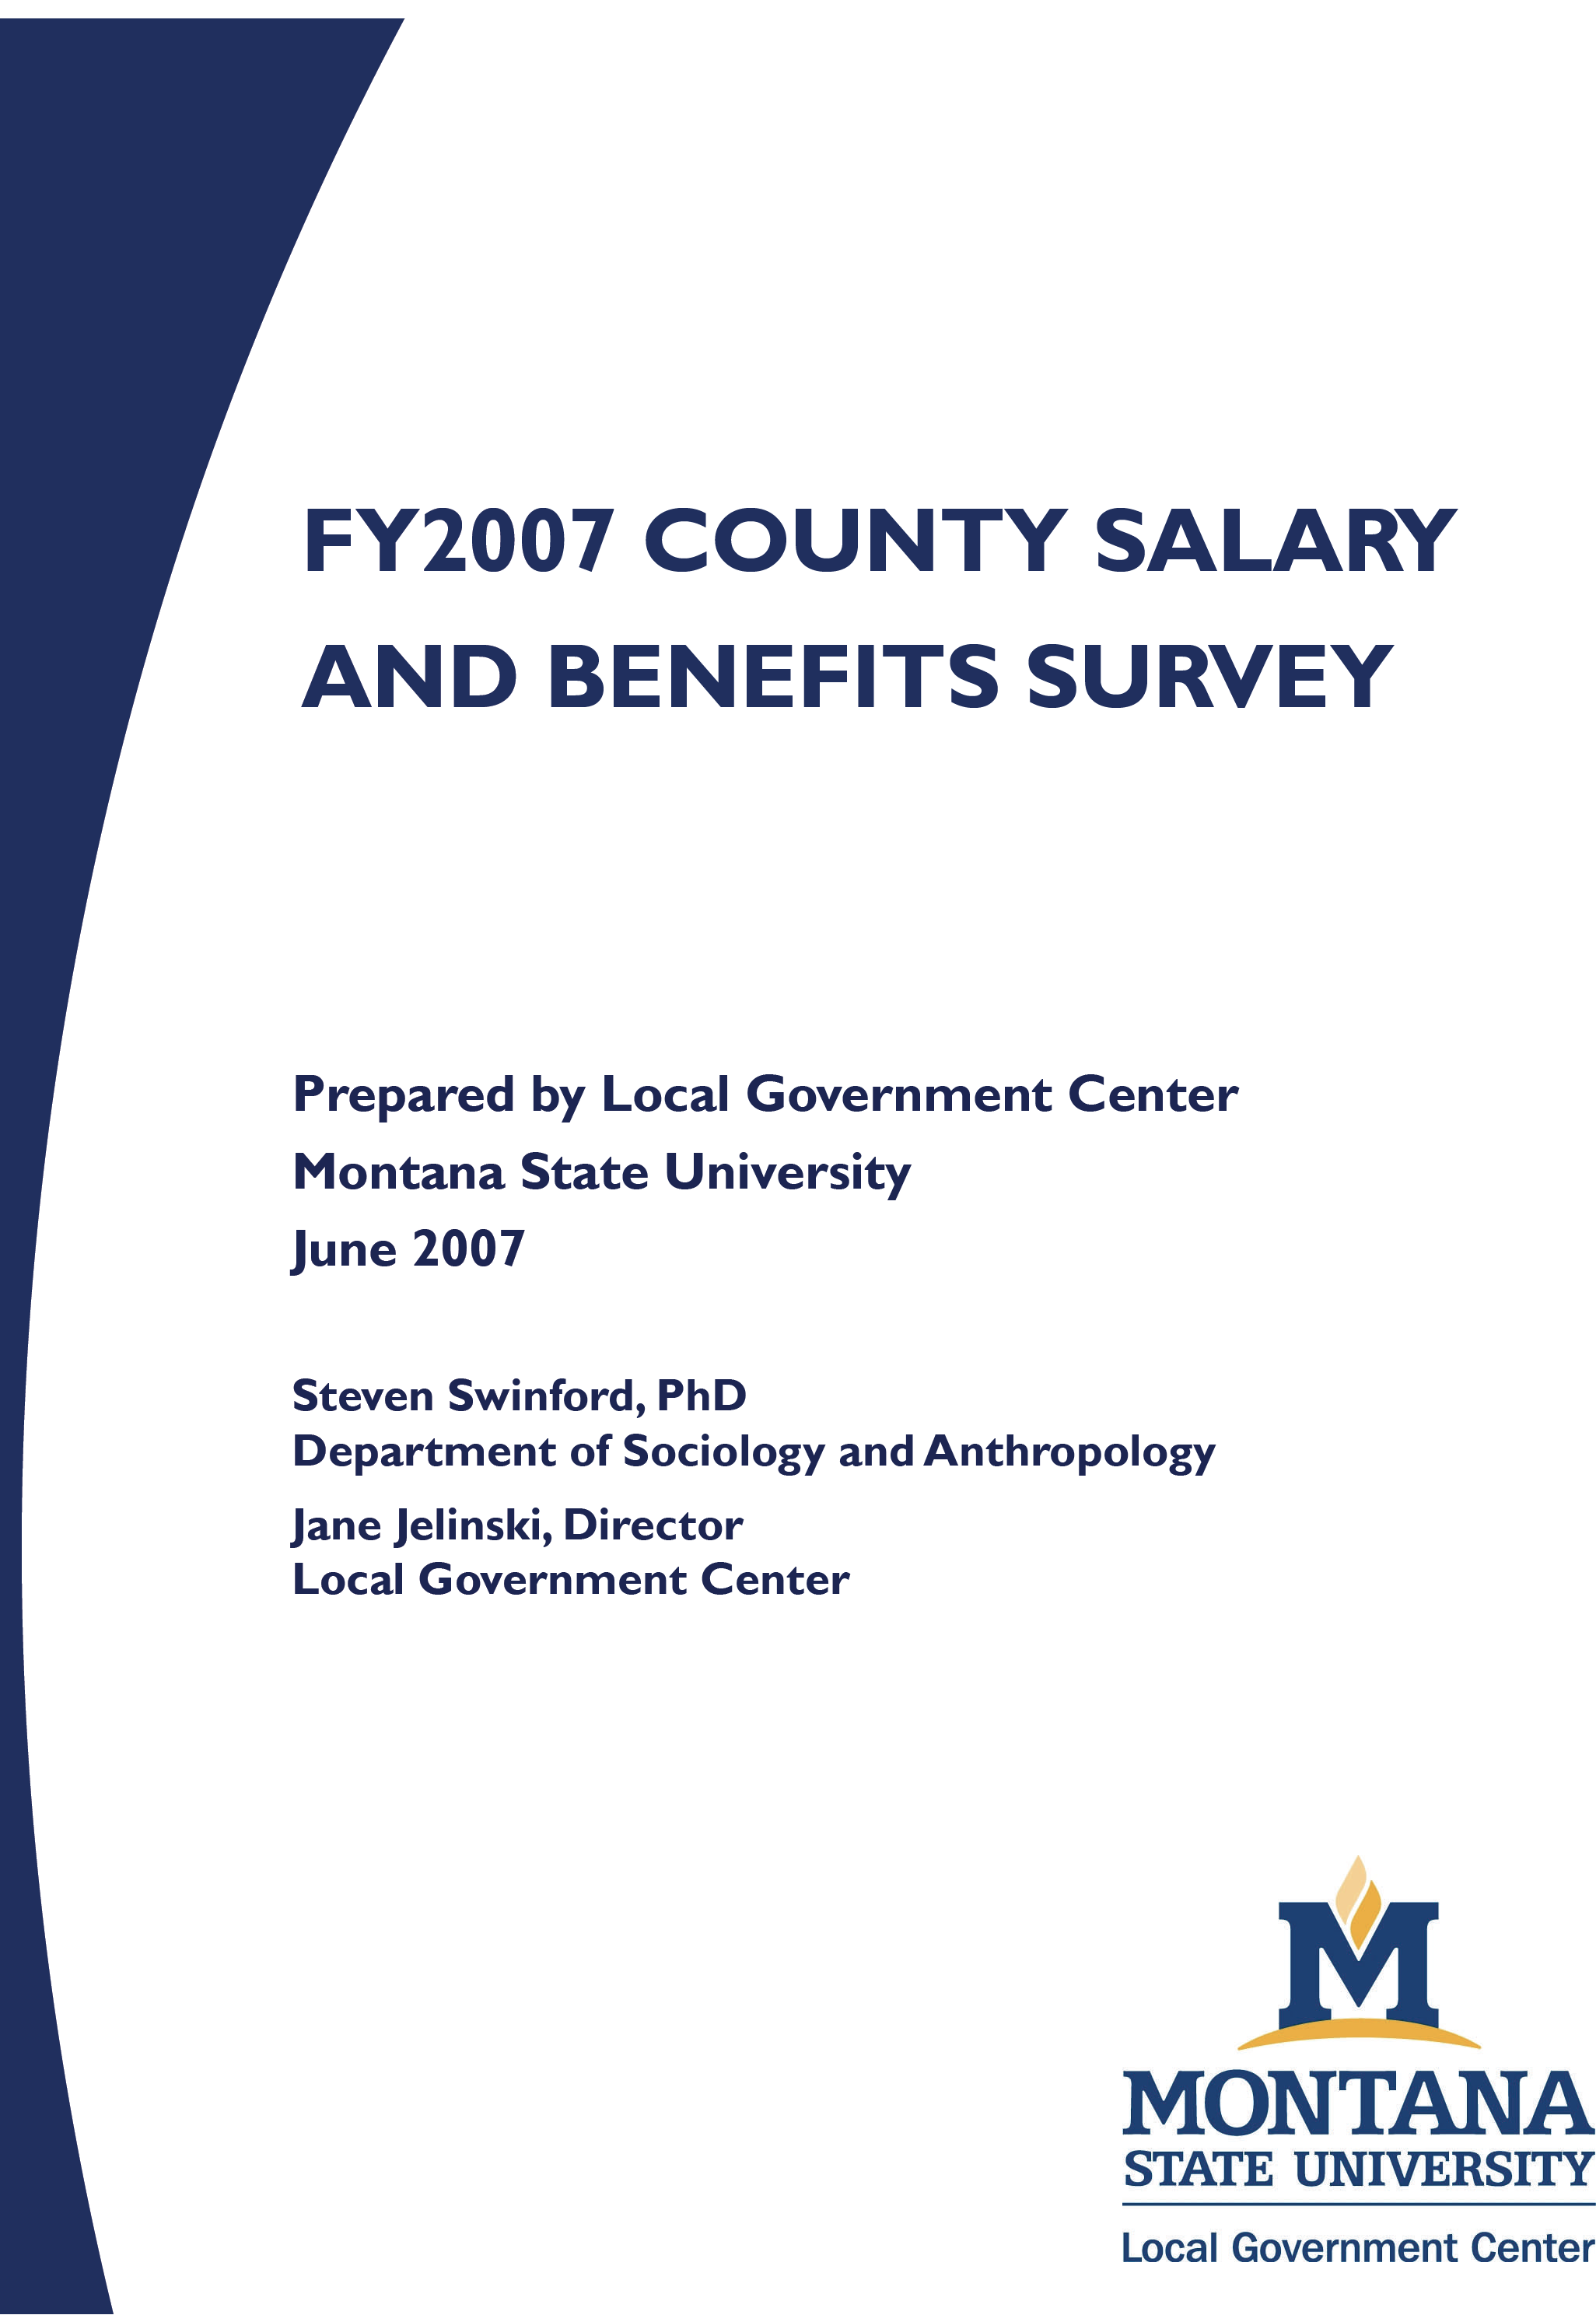 FY 2007 County Salary